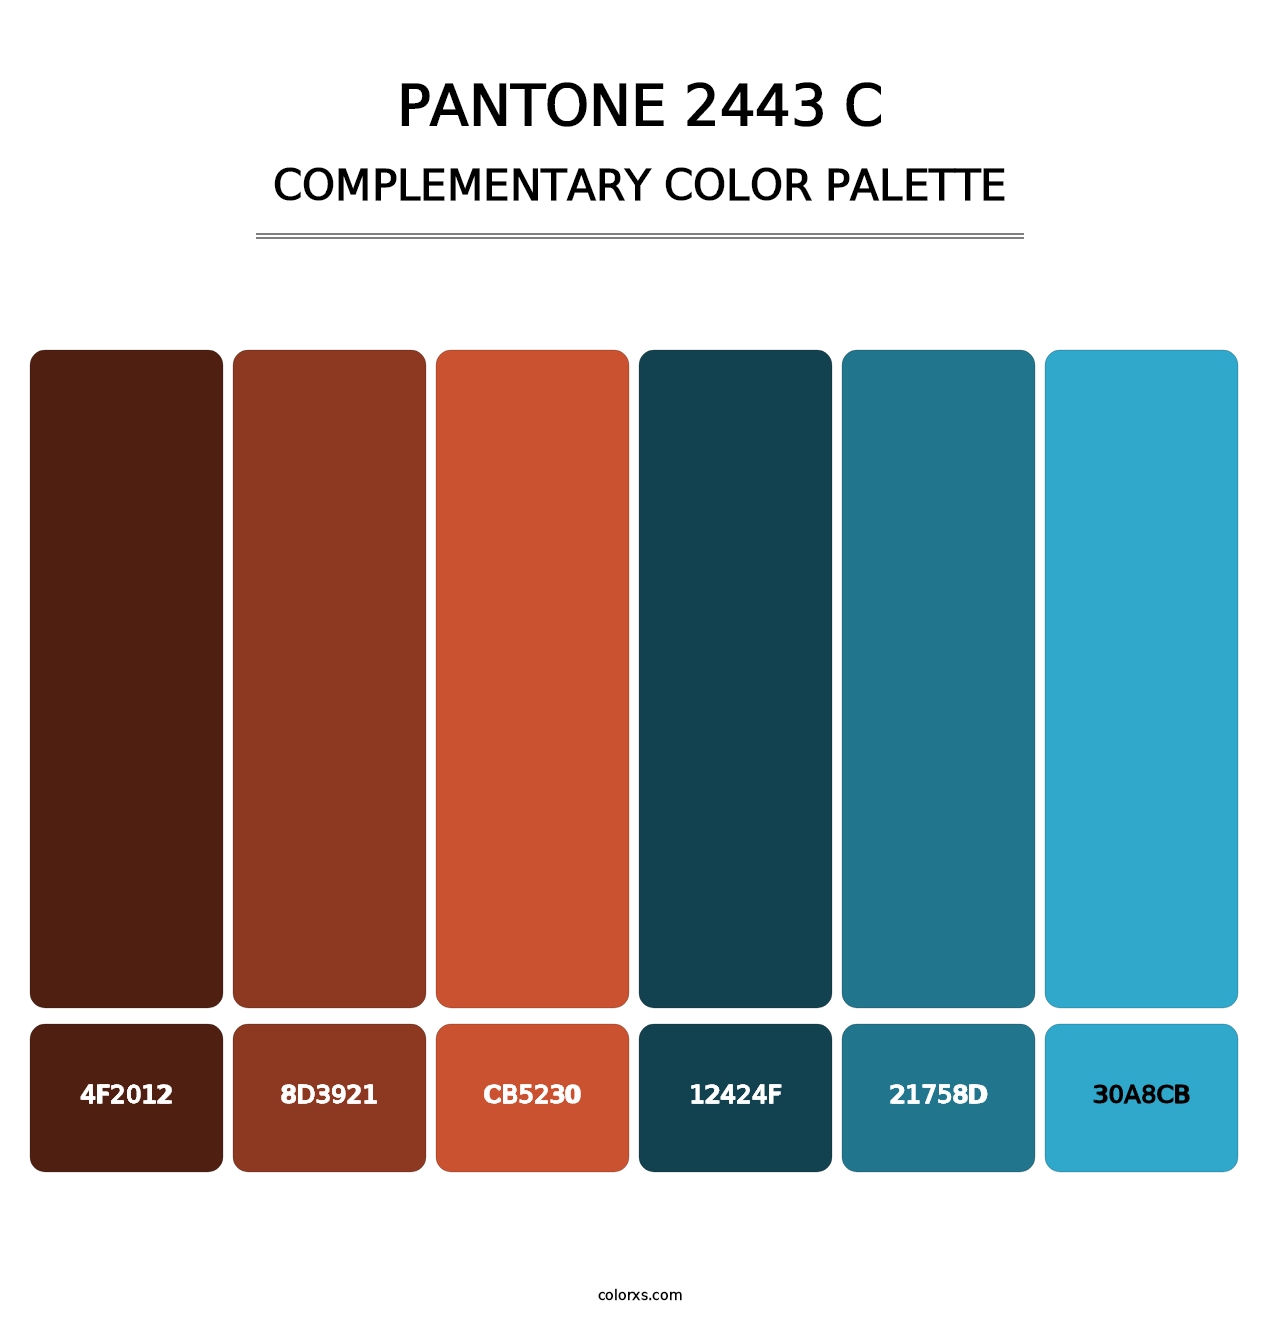 PANTONE 2443 C - Complementary Color Palette